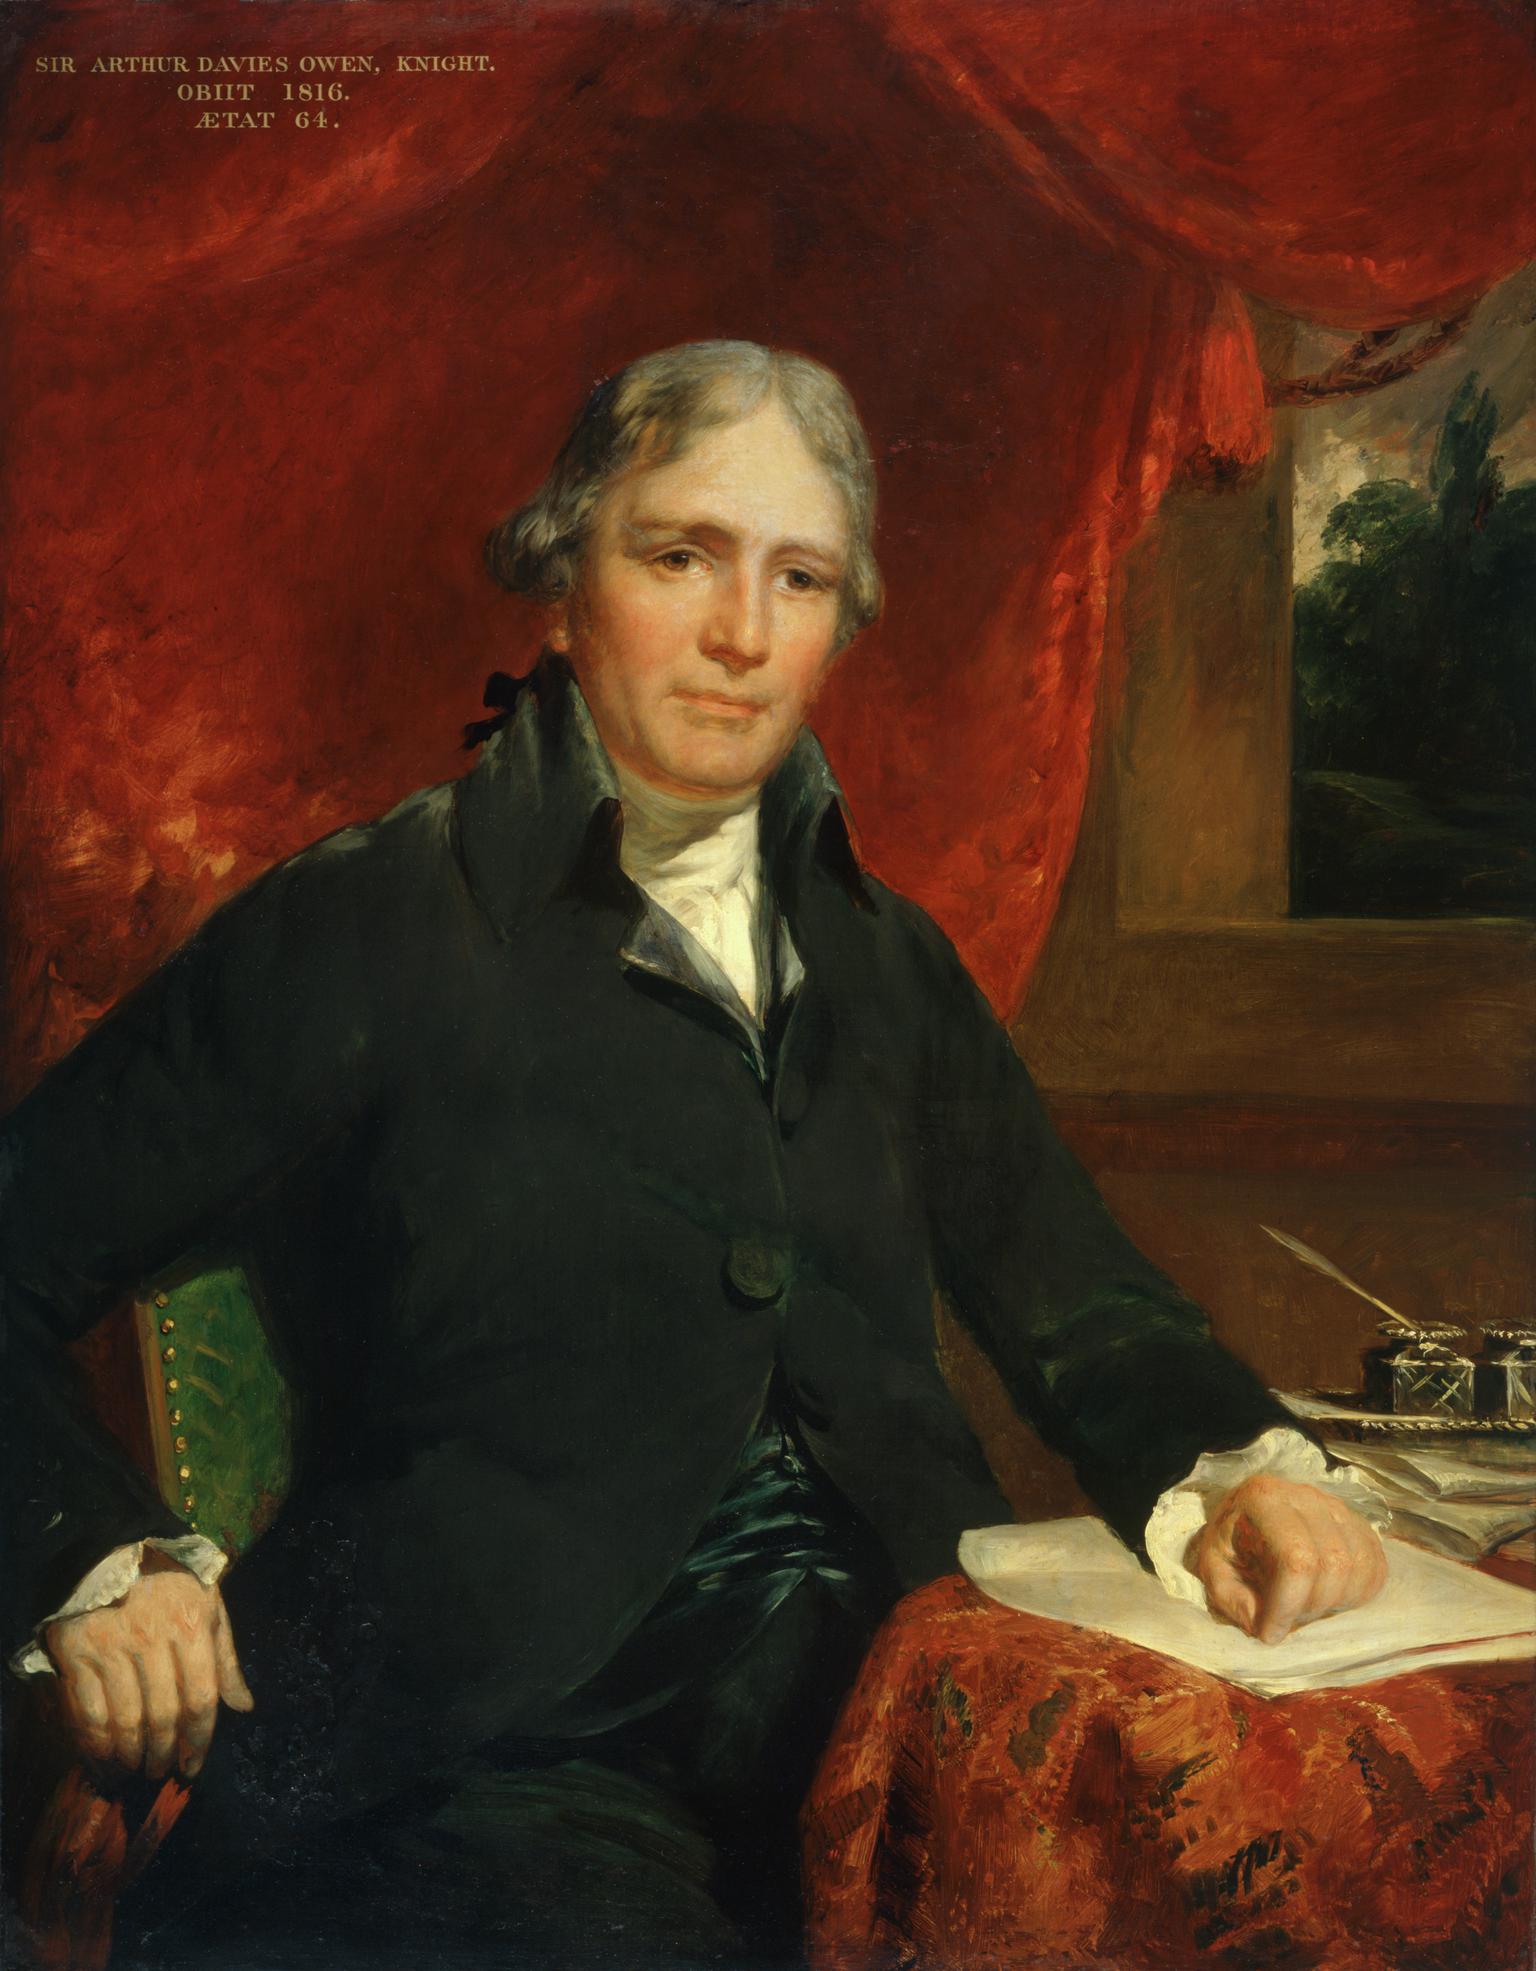 Sir Arthur Davies Owen (1752-1837)